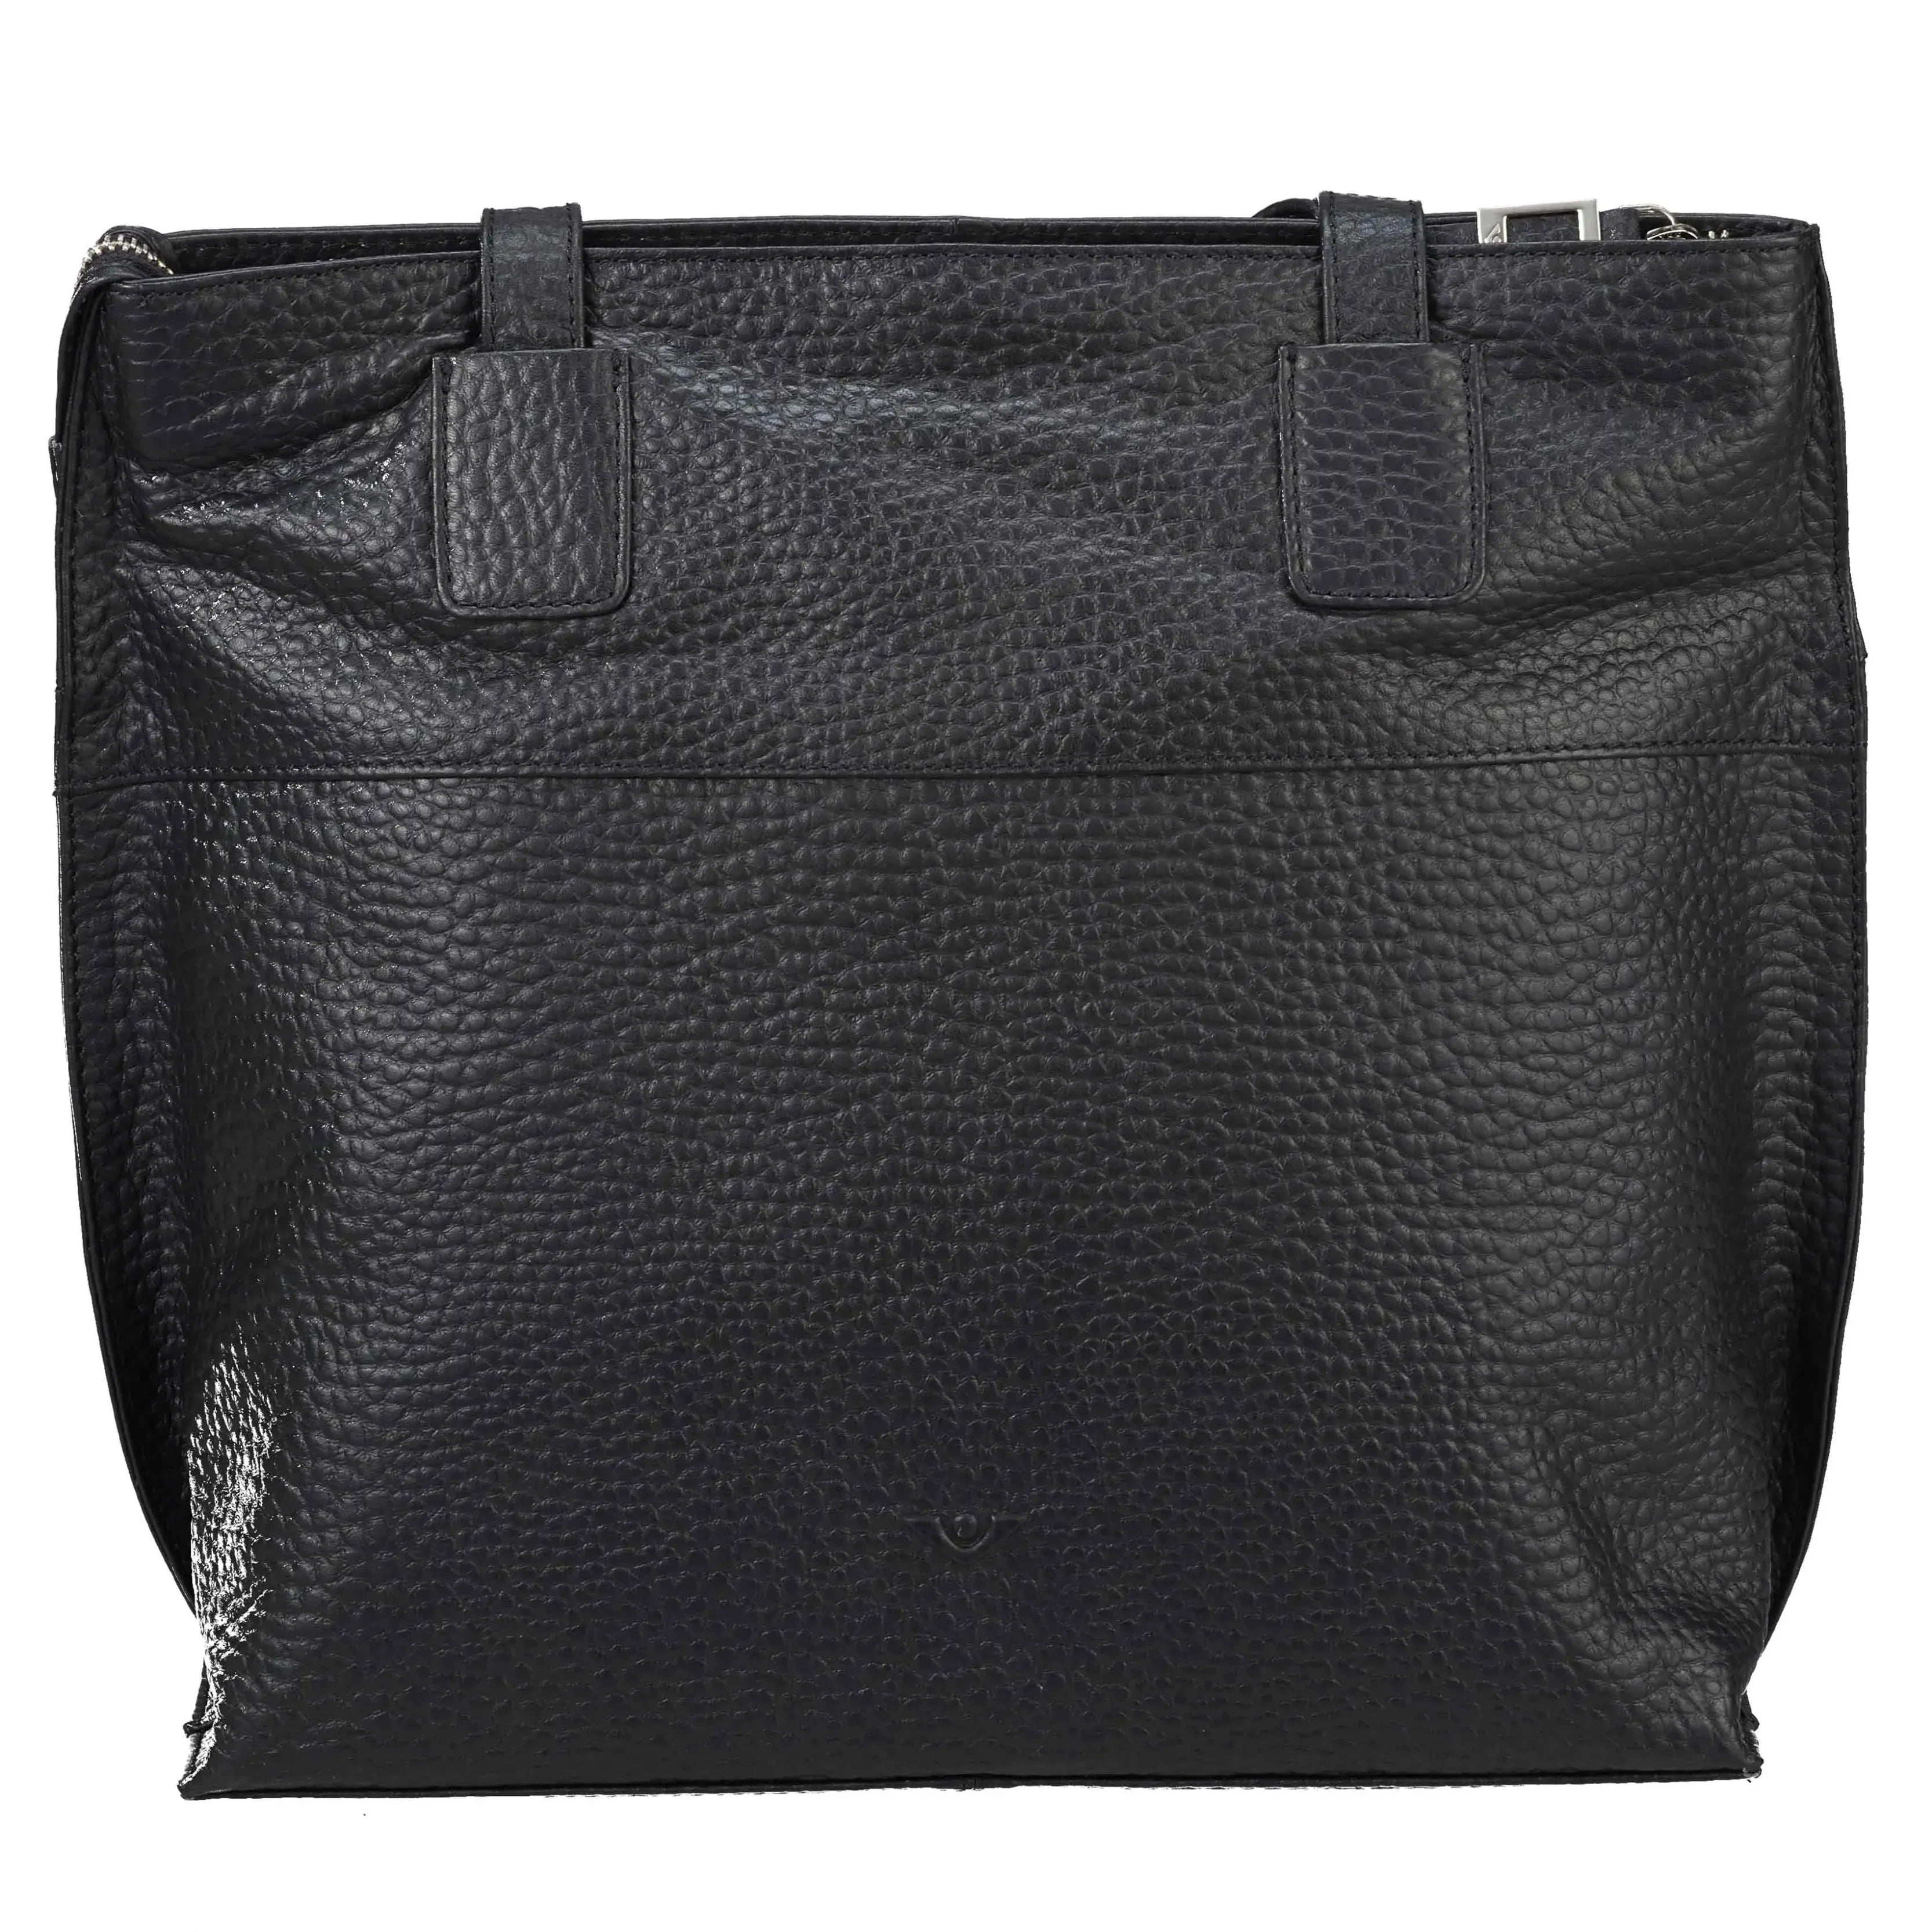 VOi-Design Hirsch Giuliana shoulder bag 39 cm - Black